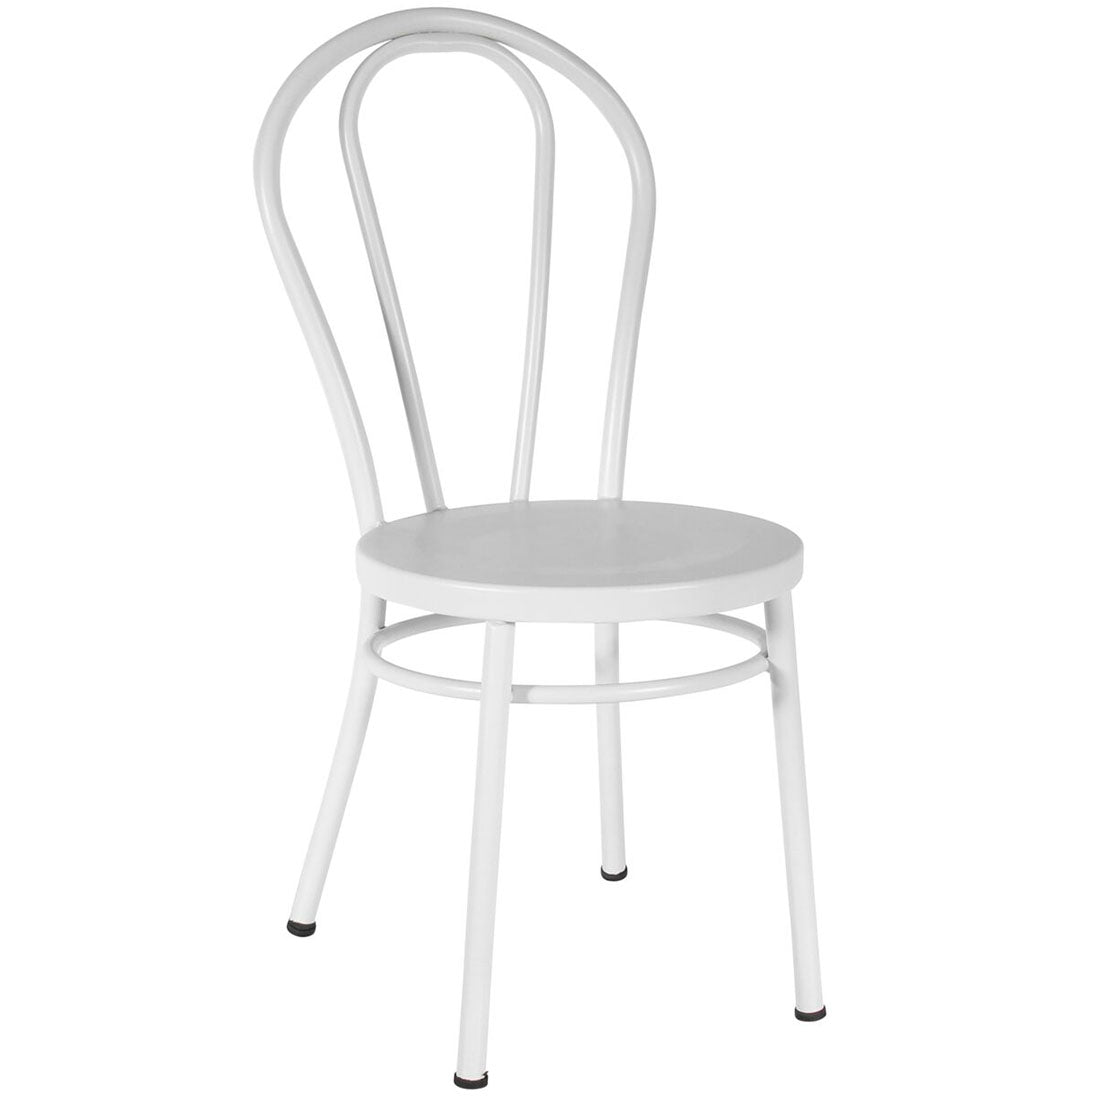 Cabaret Steel Chair - switchoffice.com.au